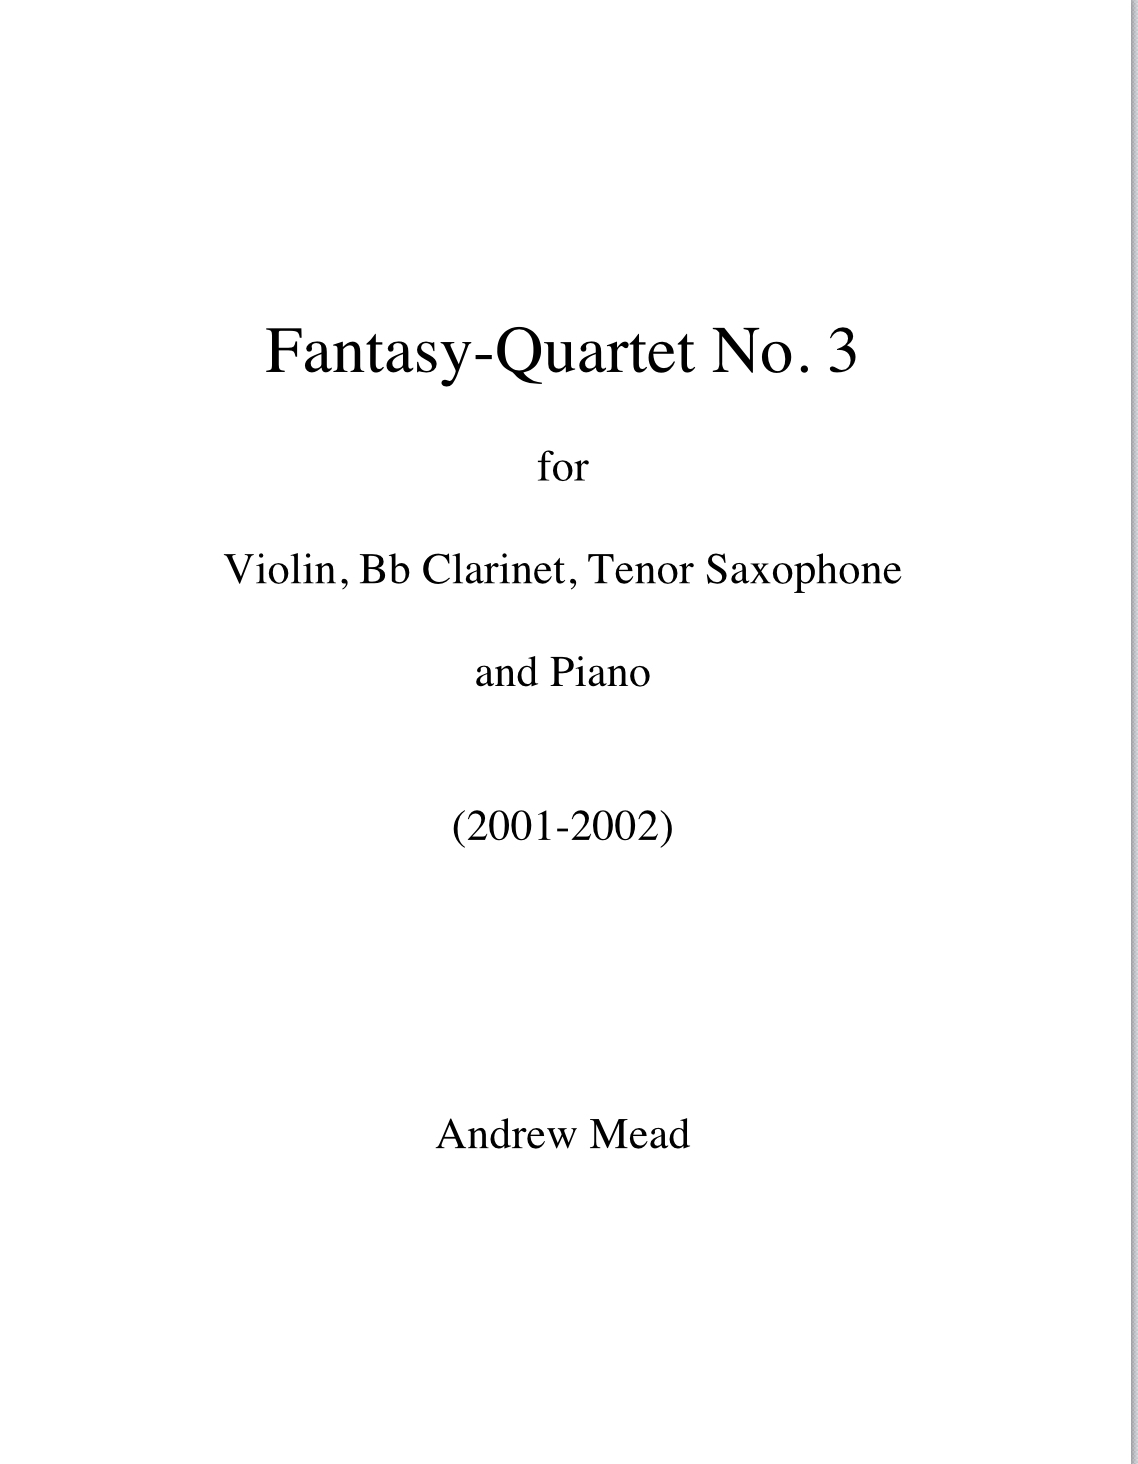 Fantasy Quartet No. 3 by Andrew Mead